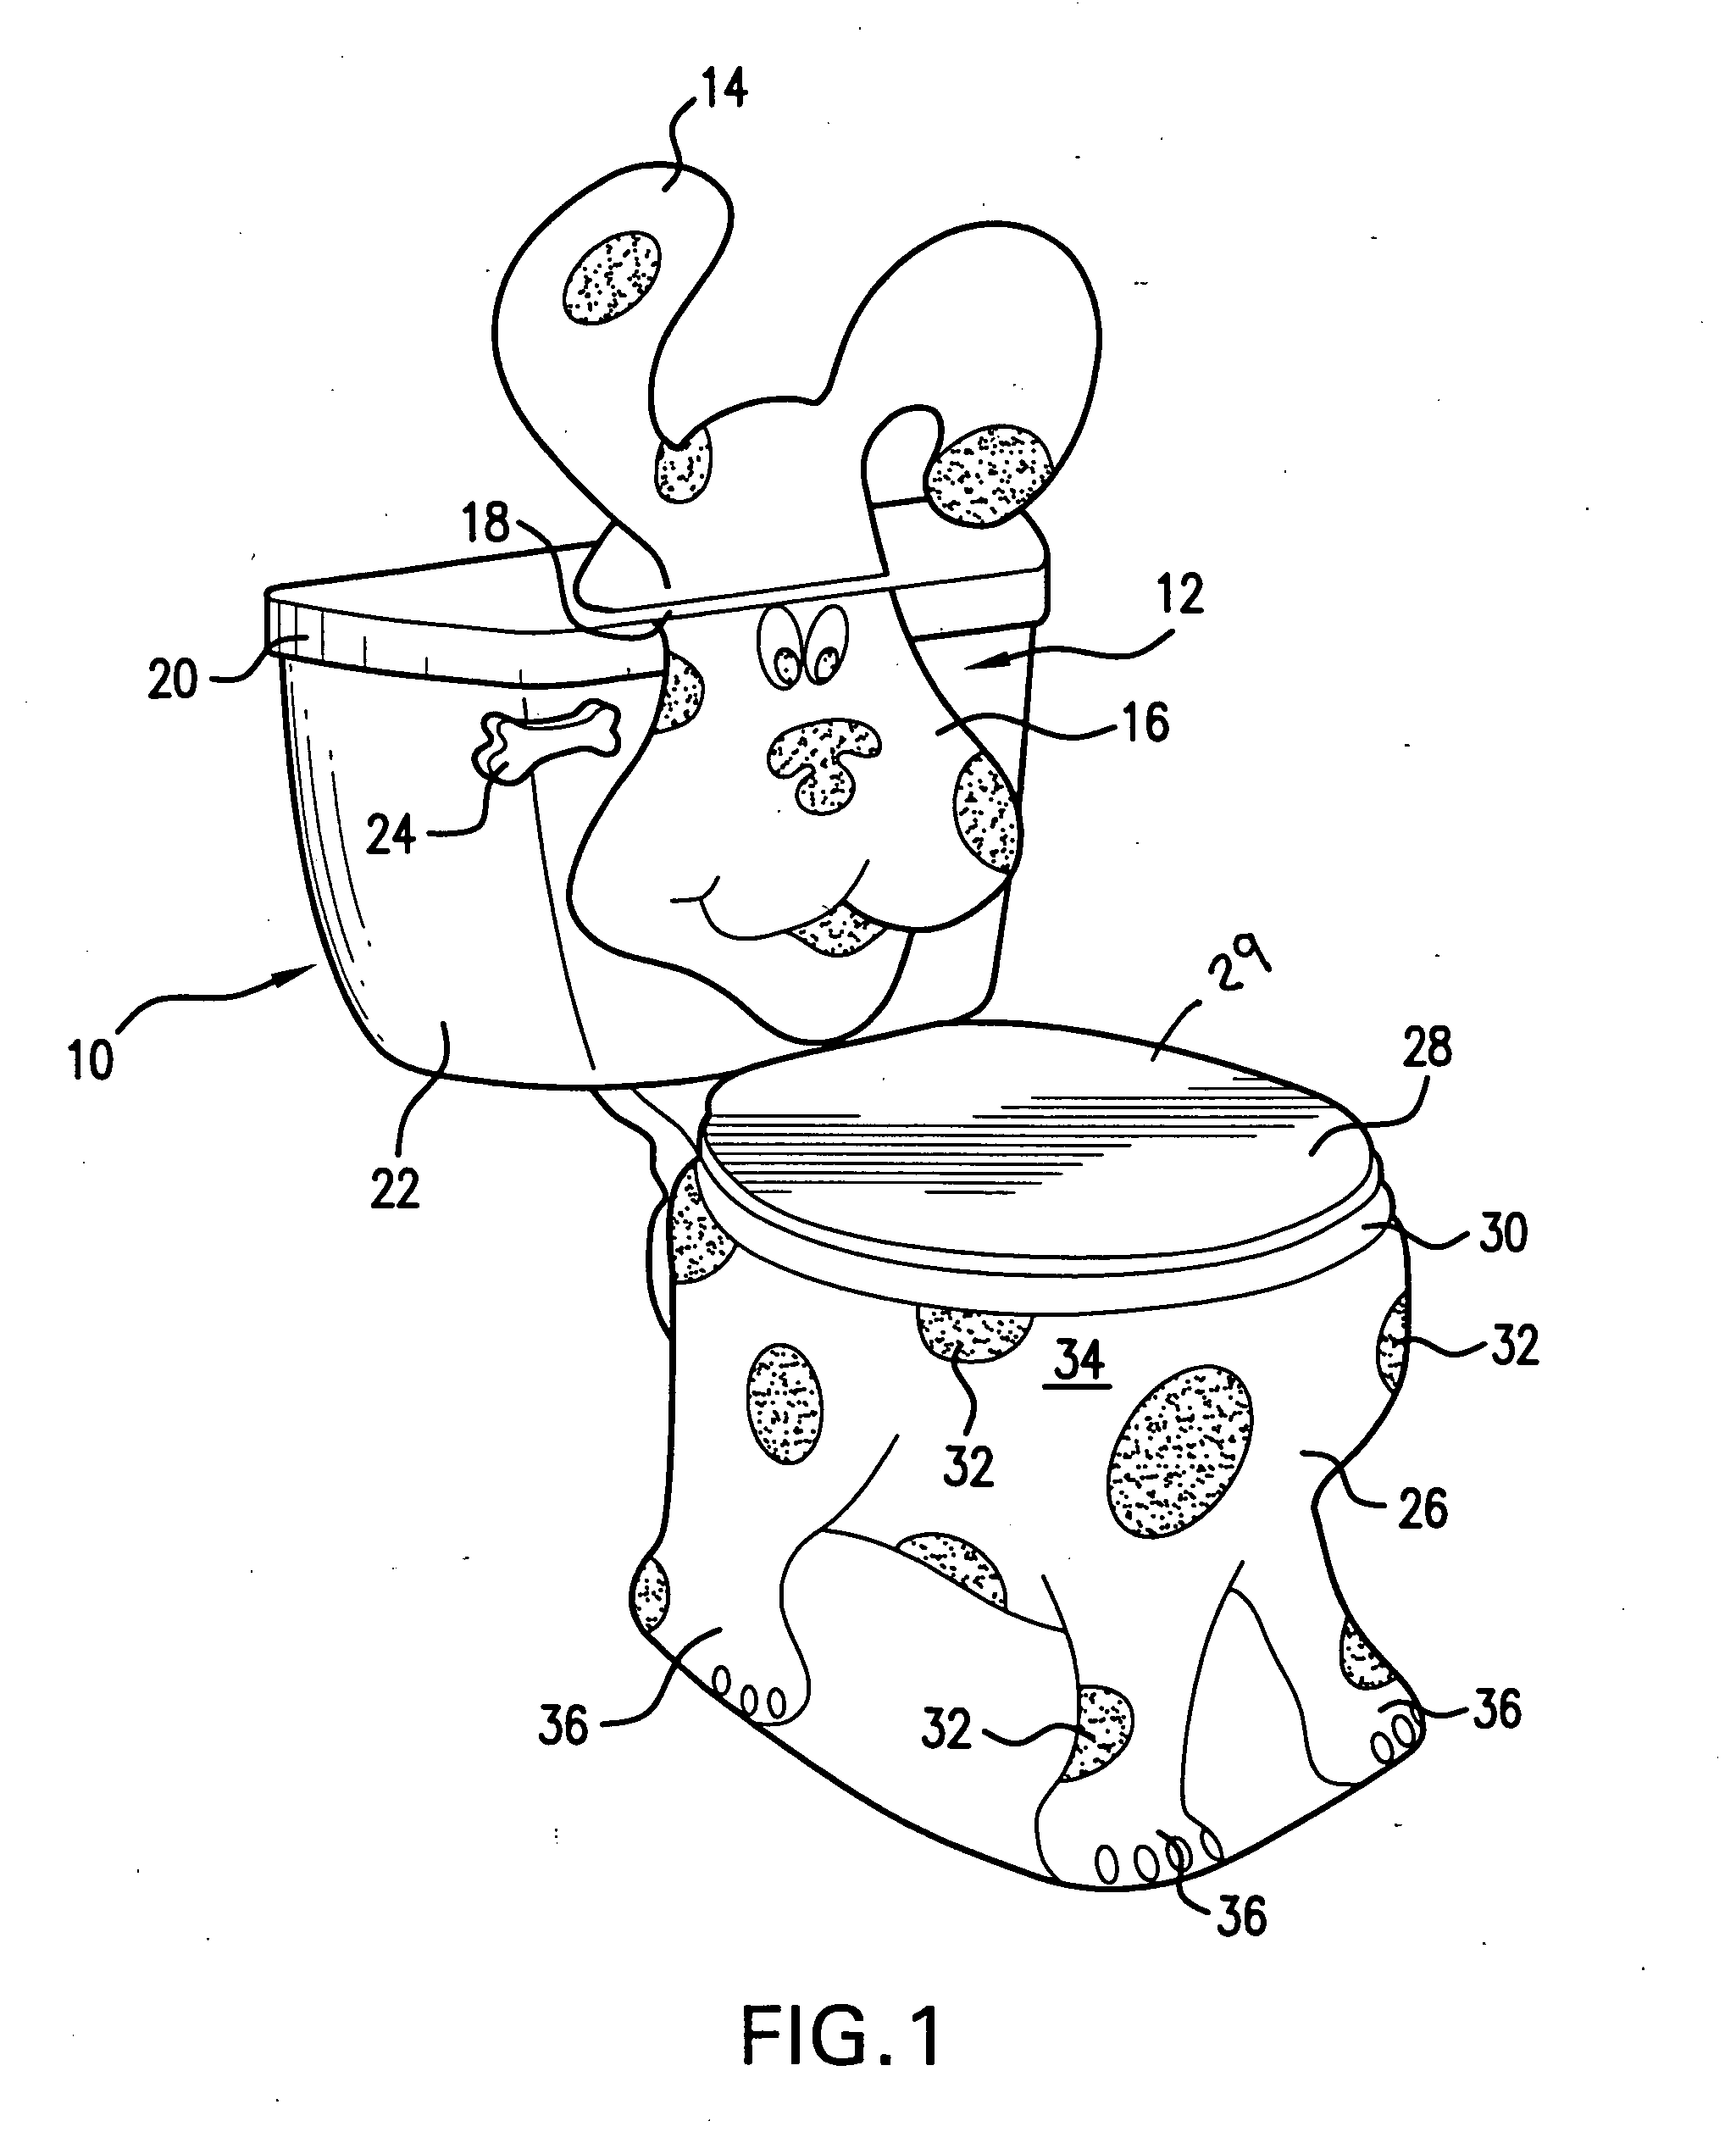 Toilet bowl attachment